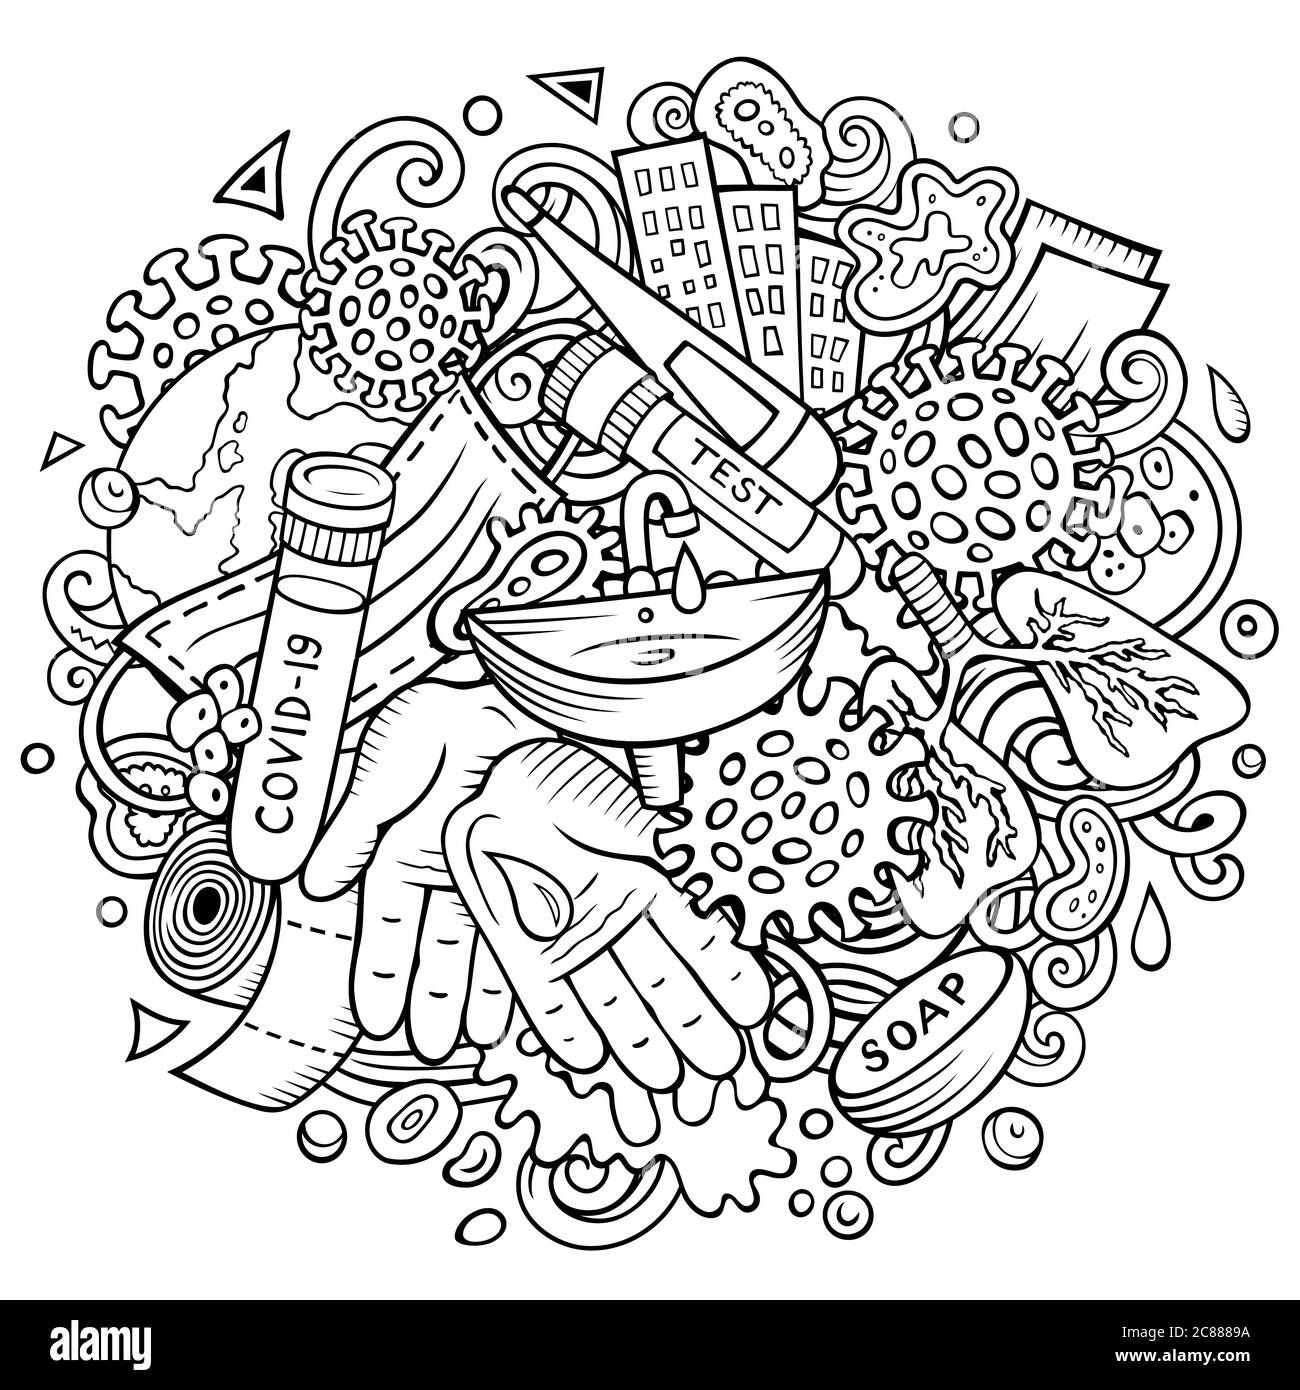 Coronavirus hand drawn cartoon doodles illustration. Colorful composition Stock Vector